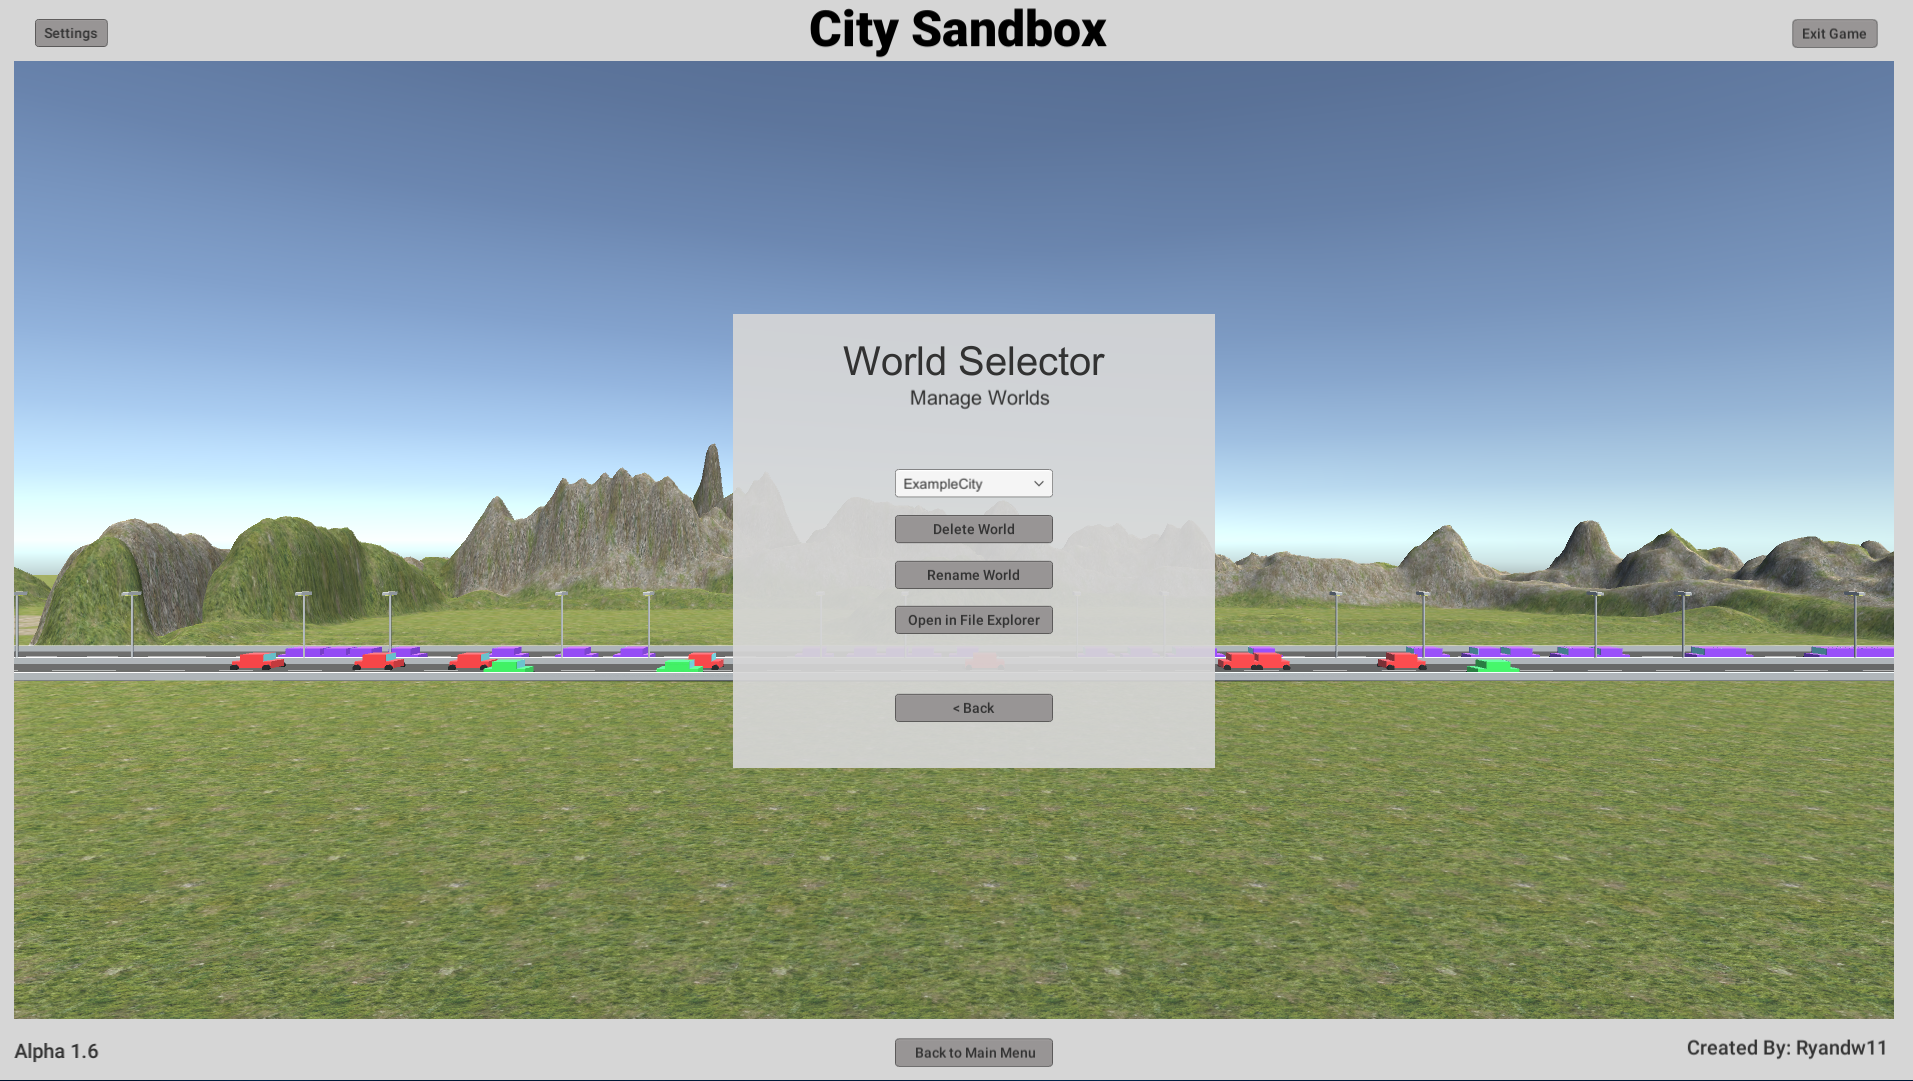 The world management screen for city sandbox.